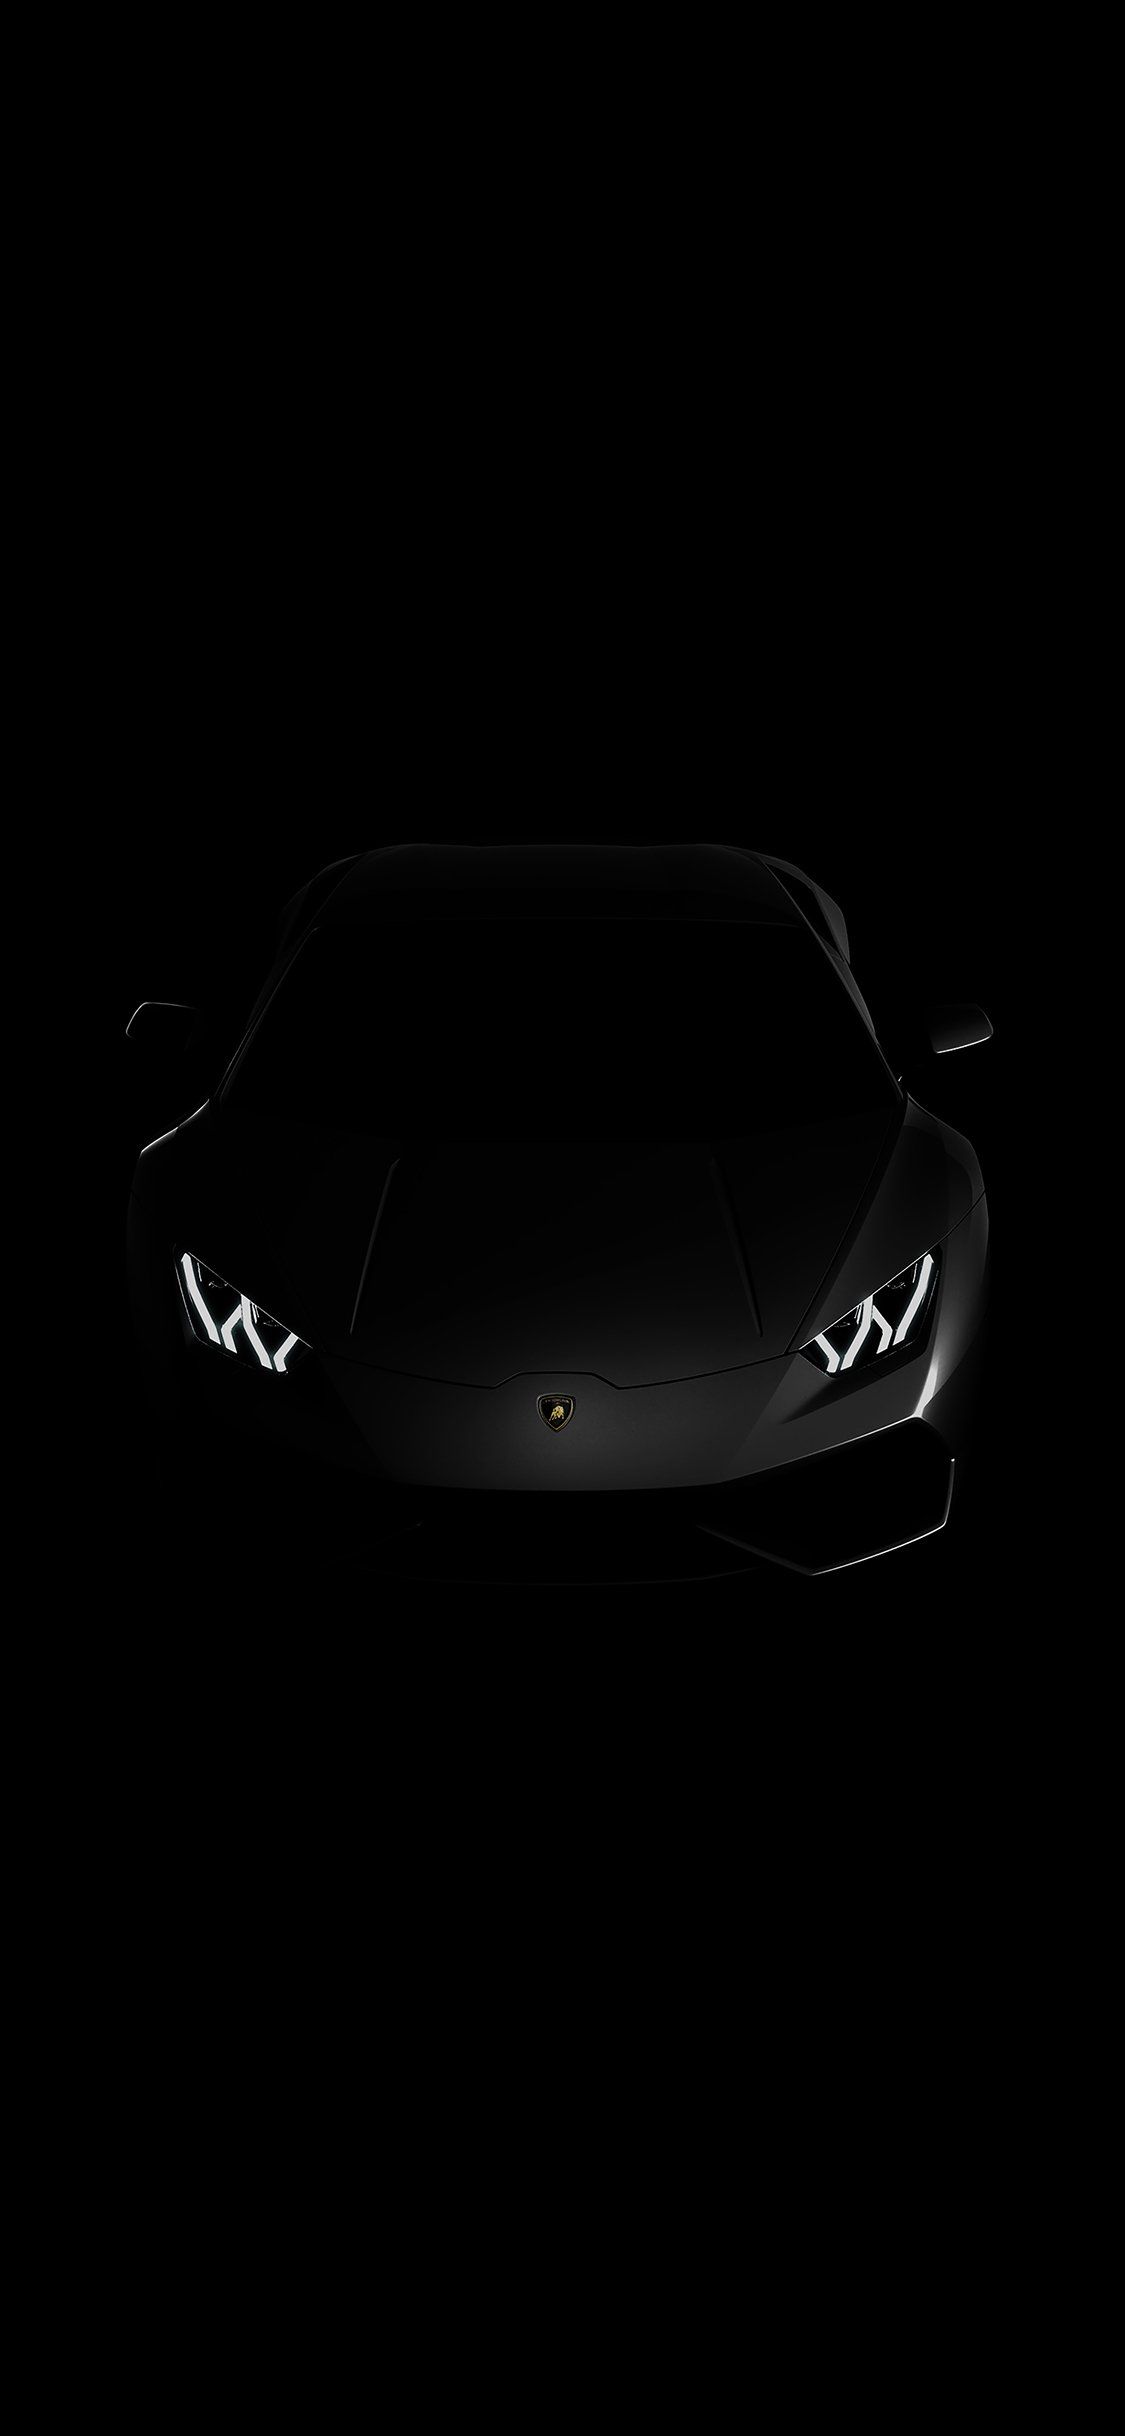 Best Auto & Vehicles iPhone X Wallpaper Free HD